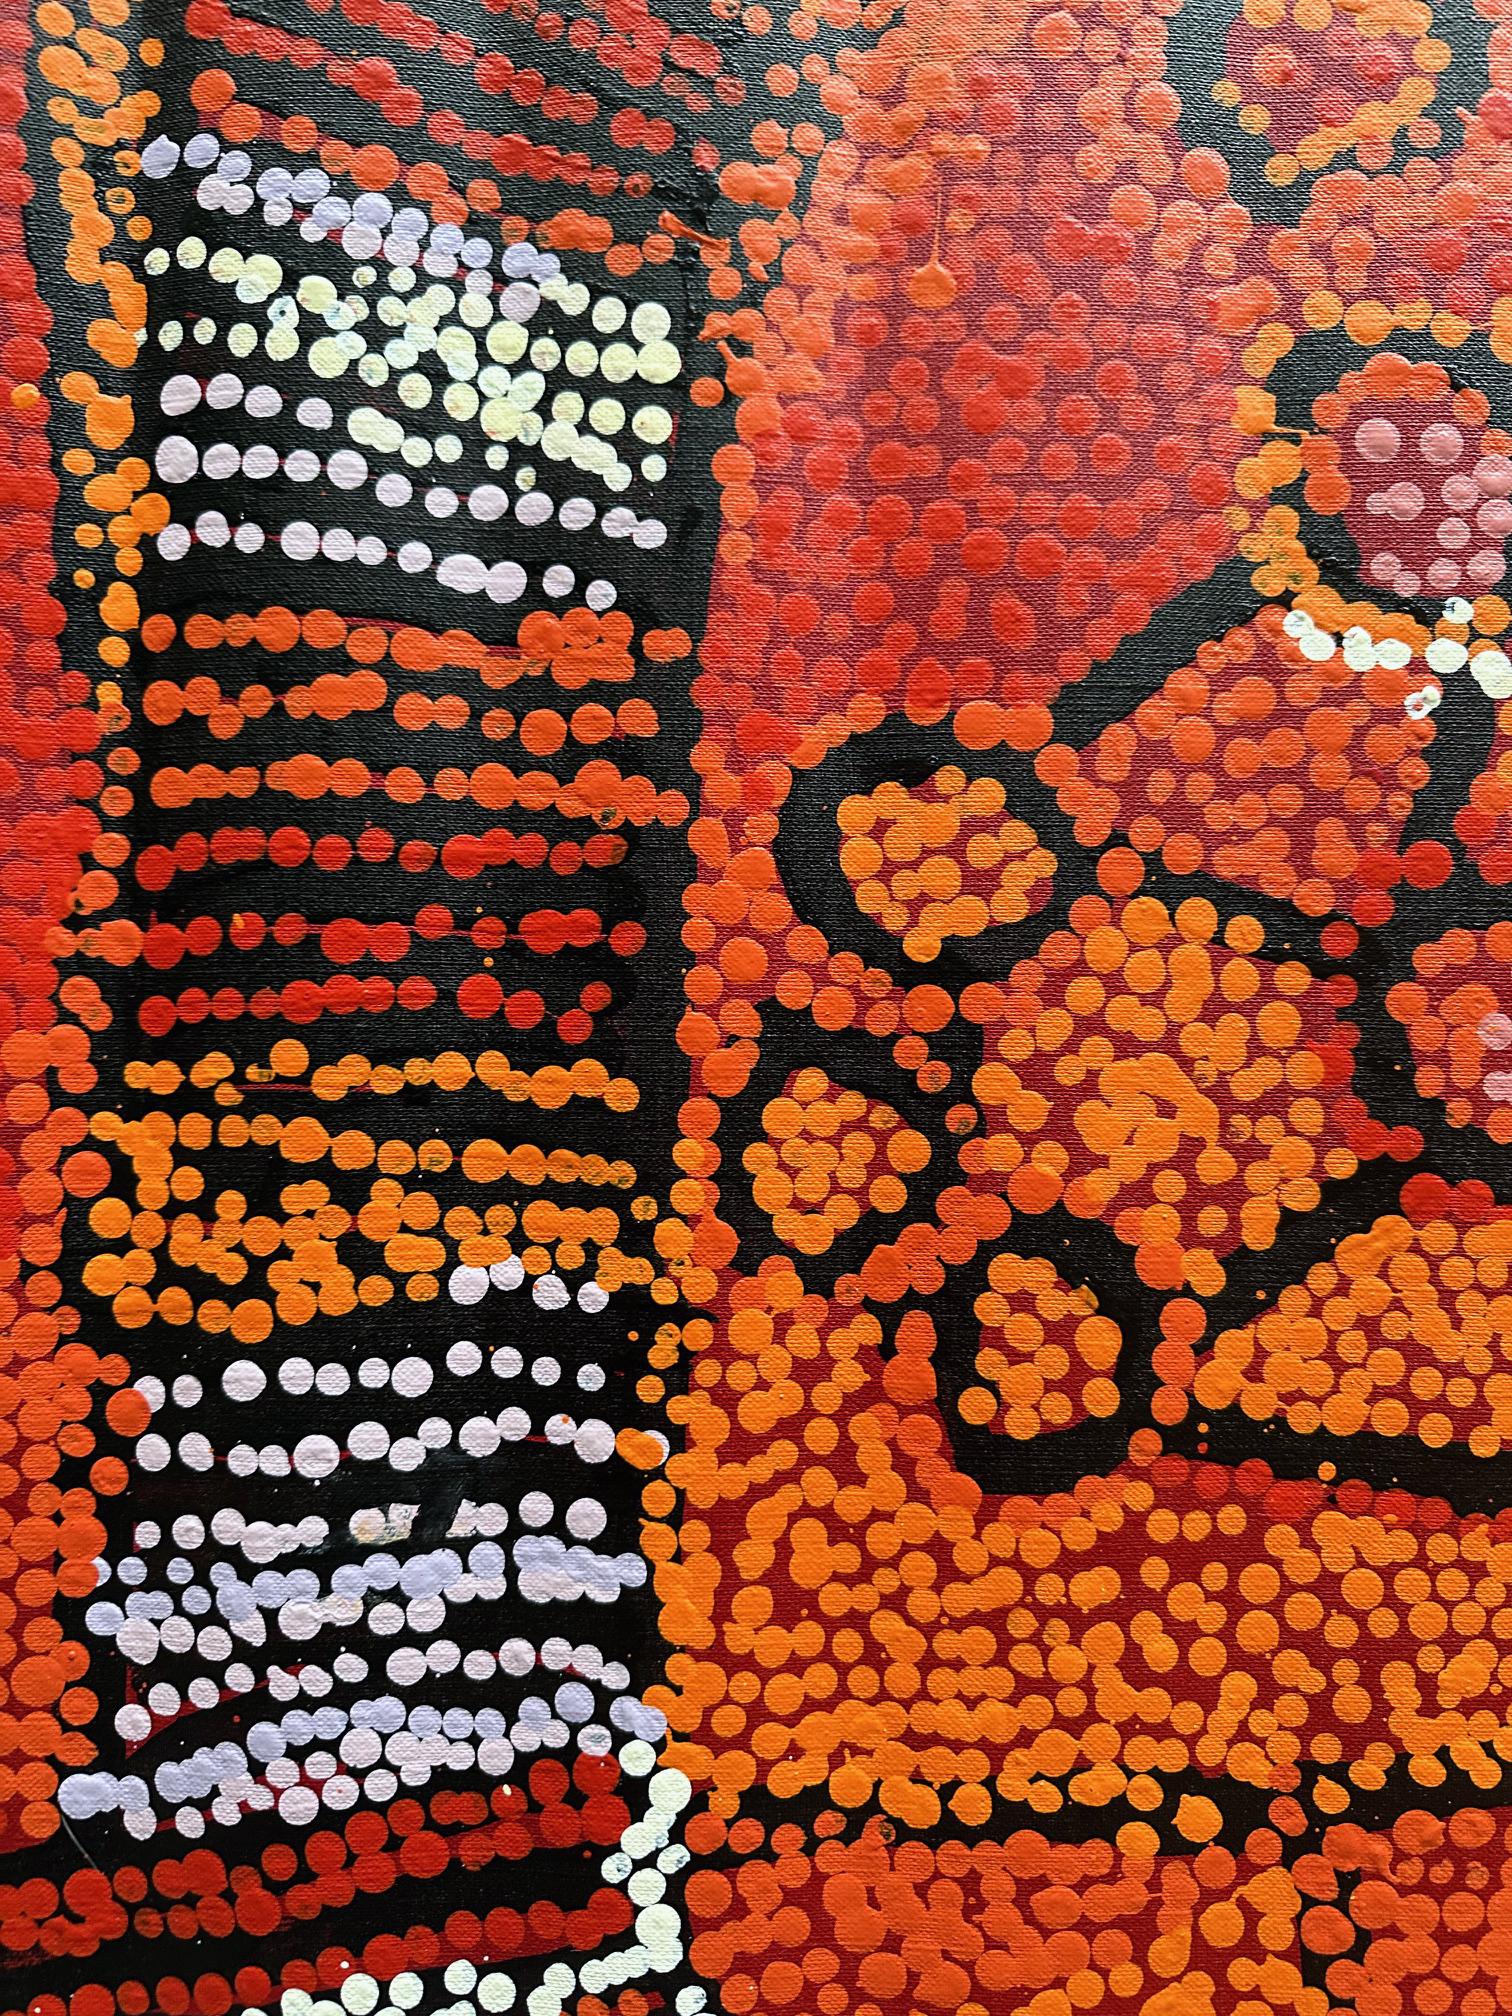 Contemporary Australian Aboriginal Painting by Naata Nungurrayi 2